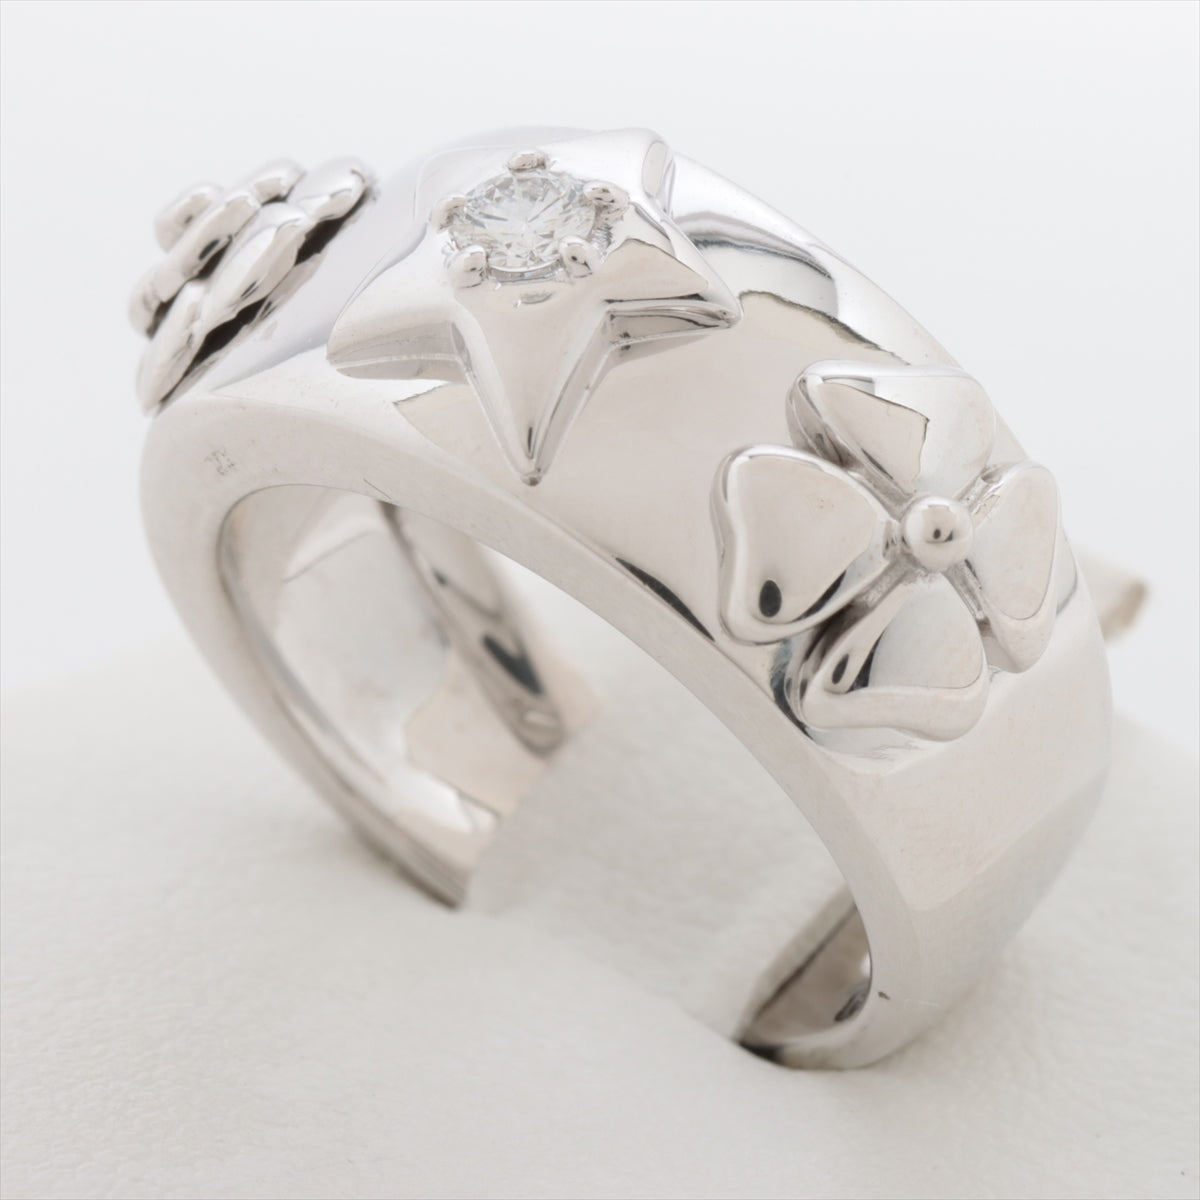 Chanel Three Symbols diamond rings 750(WG) 11.8g